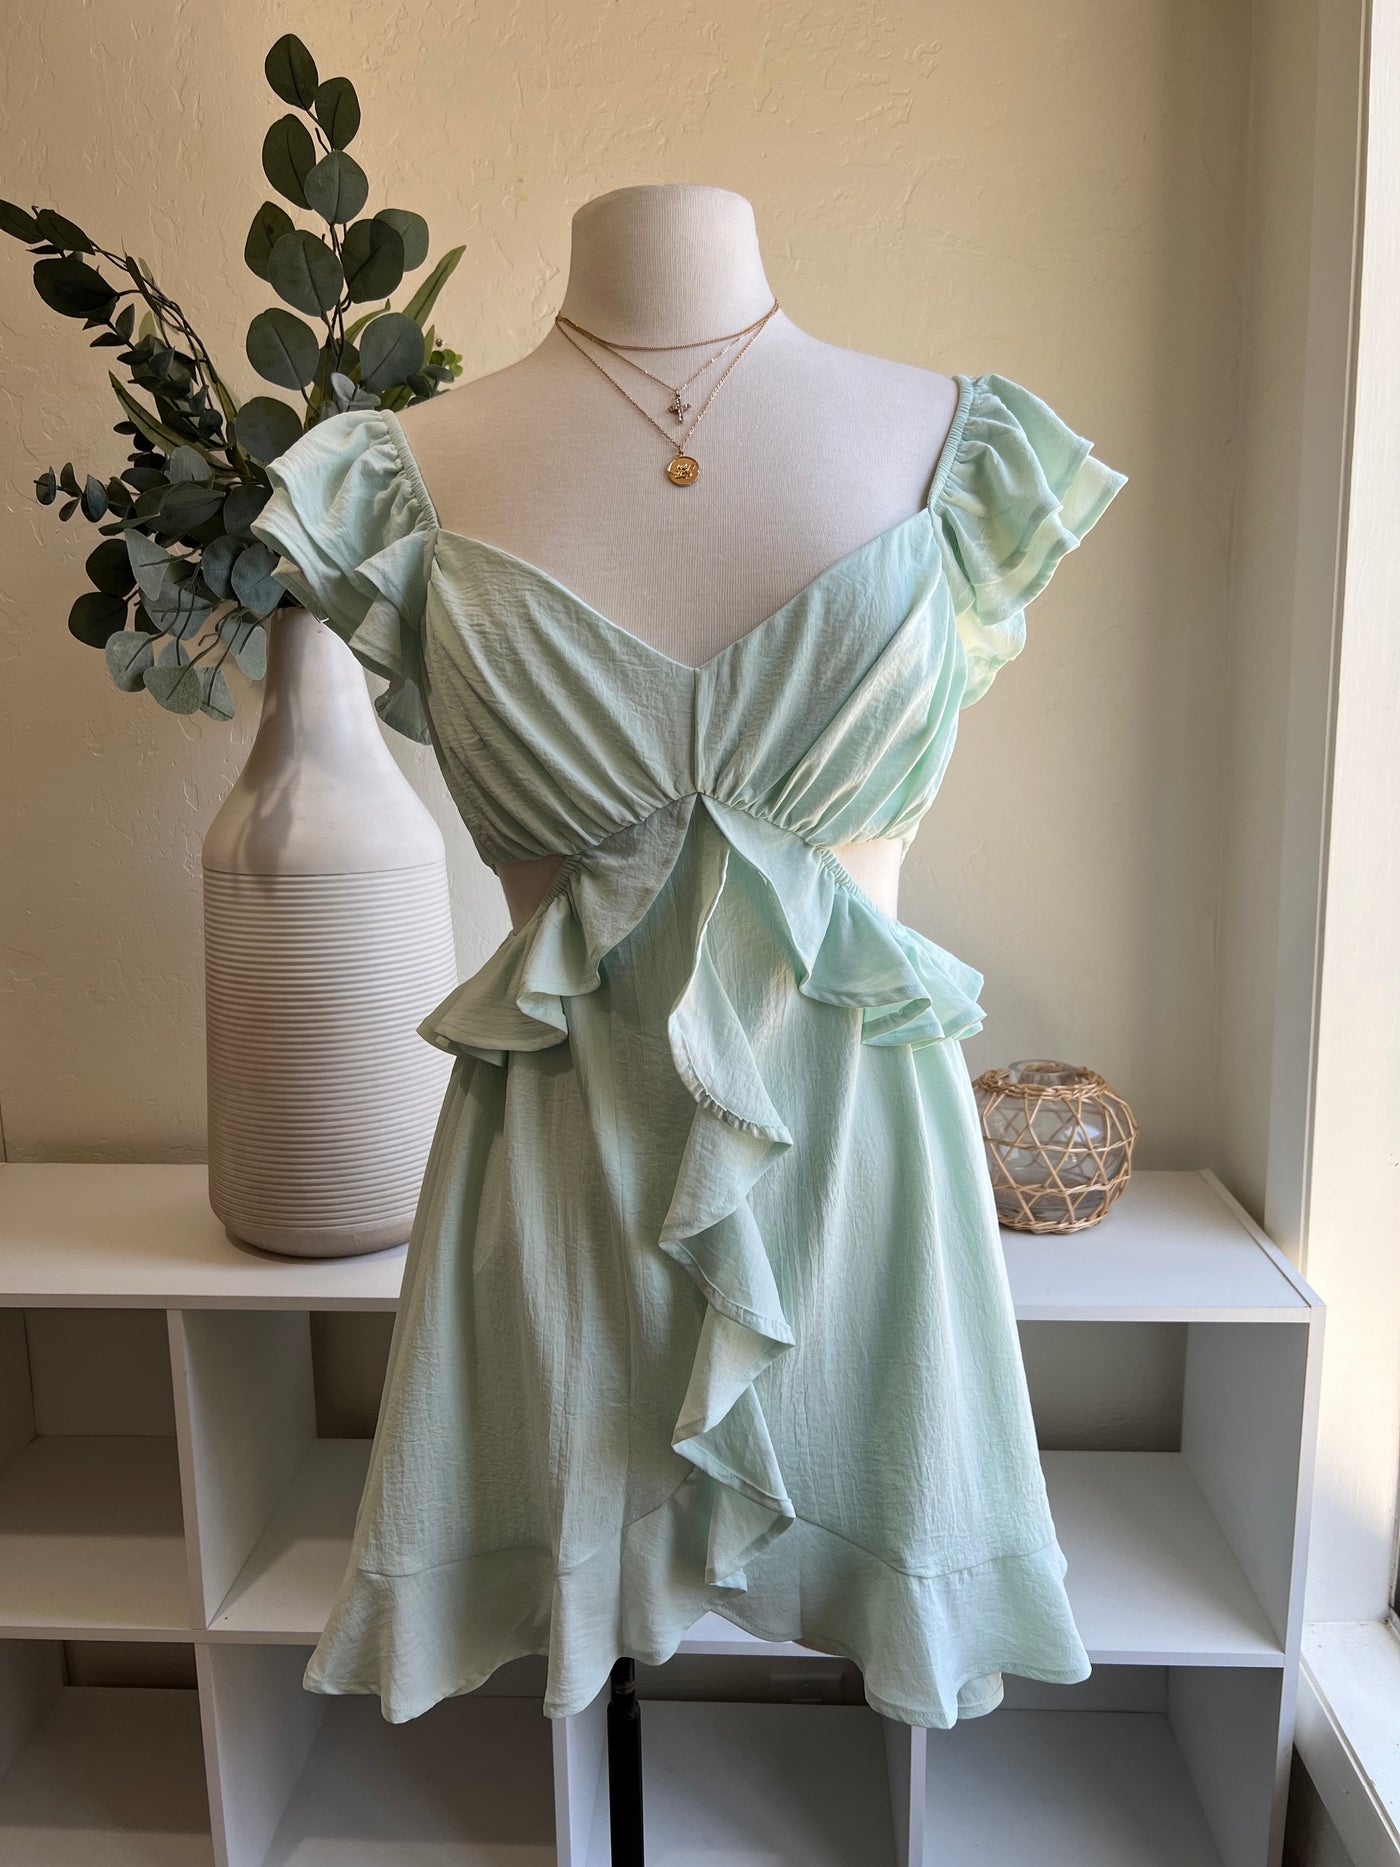 Enchanting Mini Dress - Mint